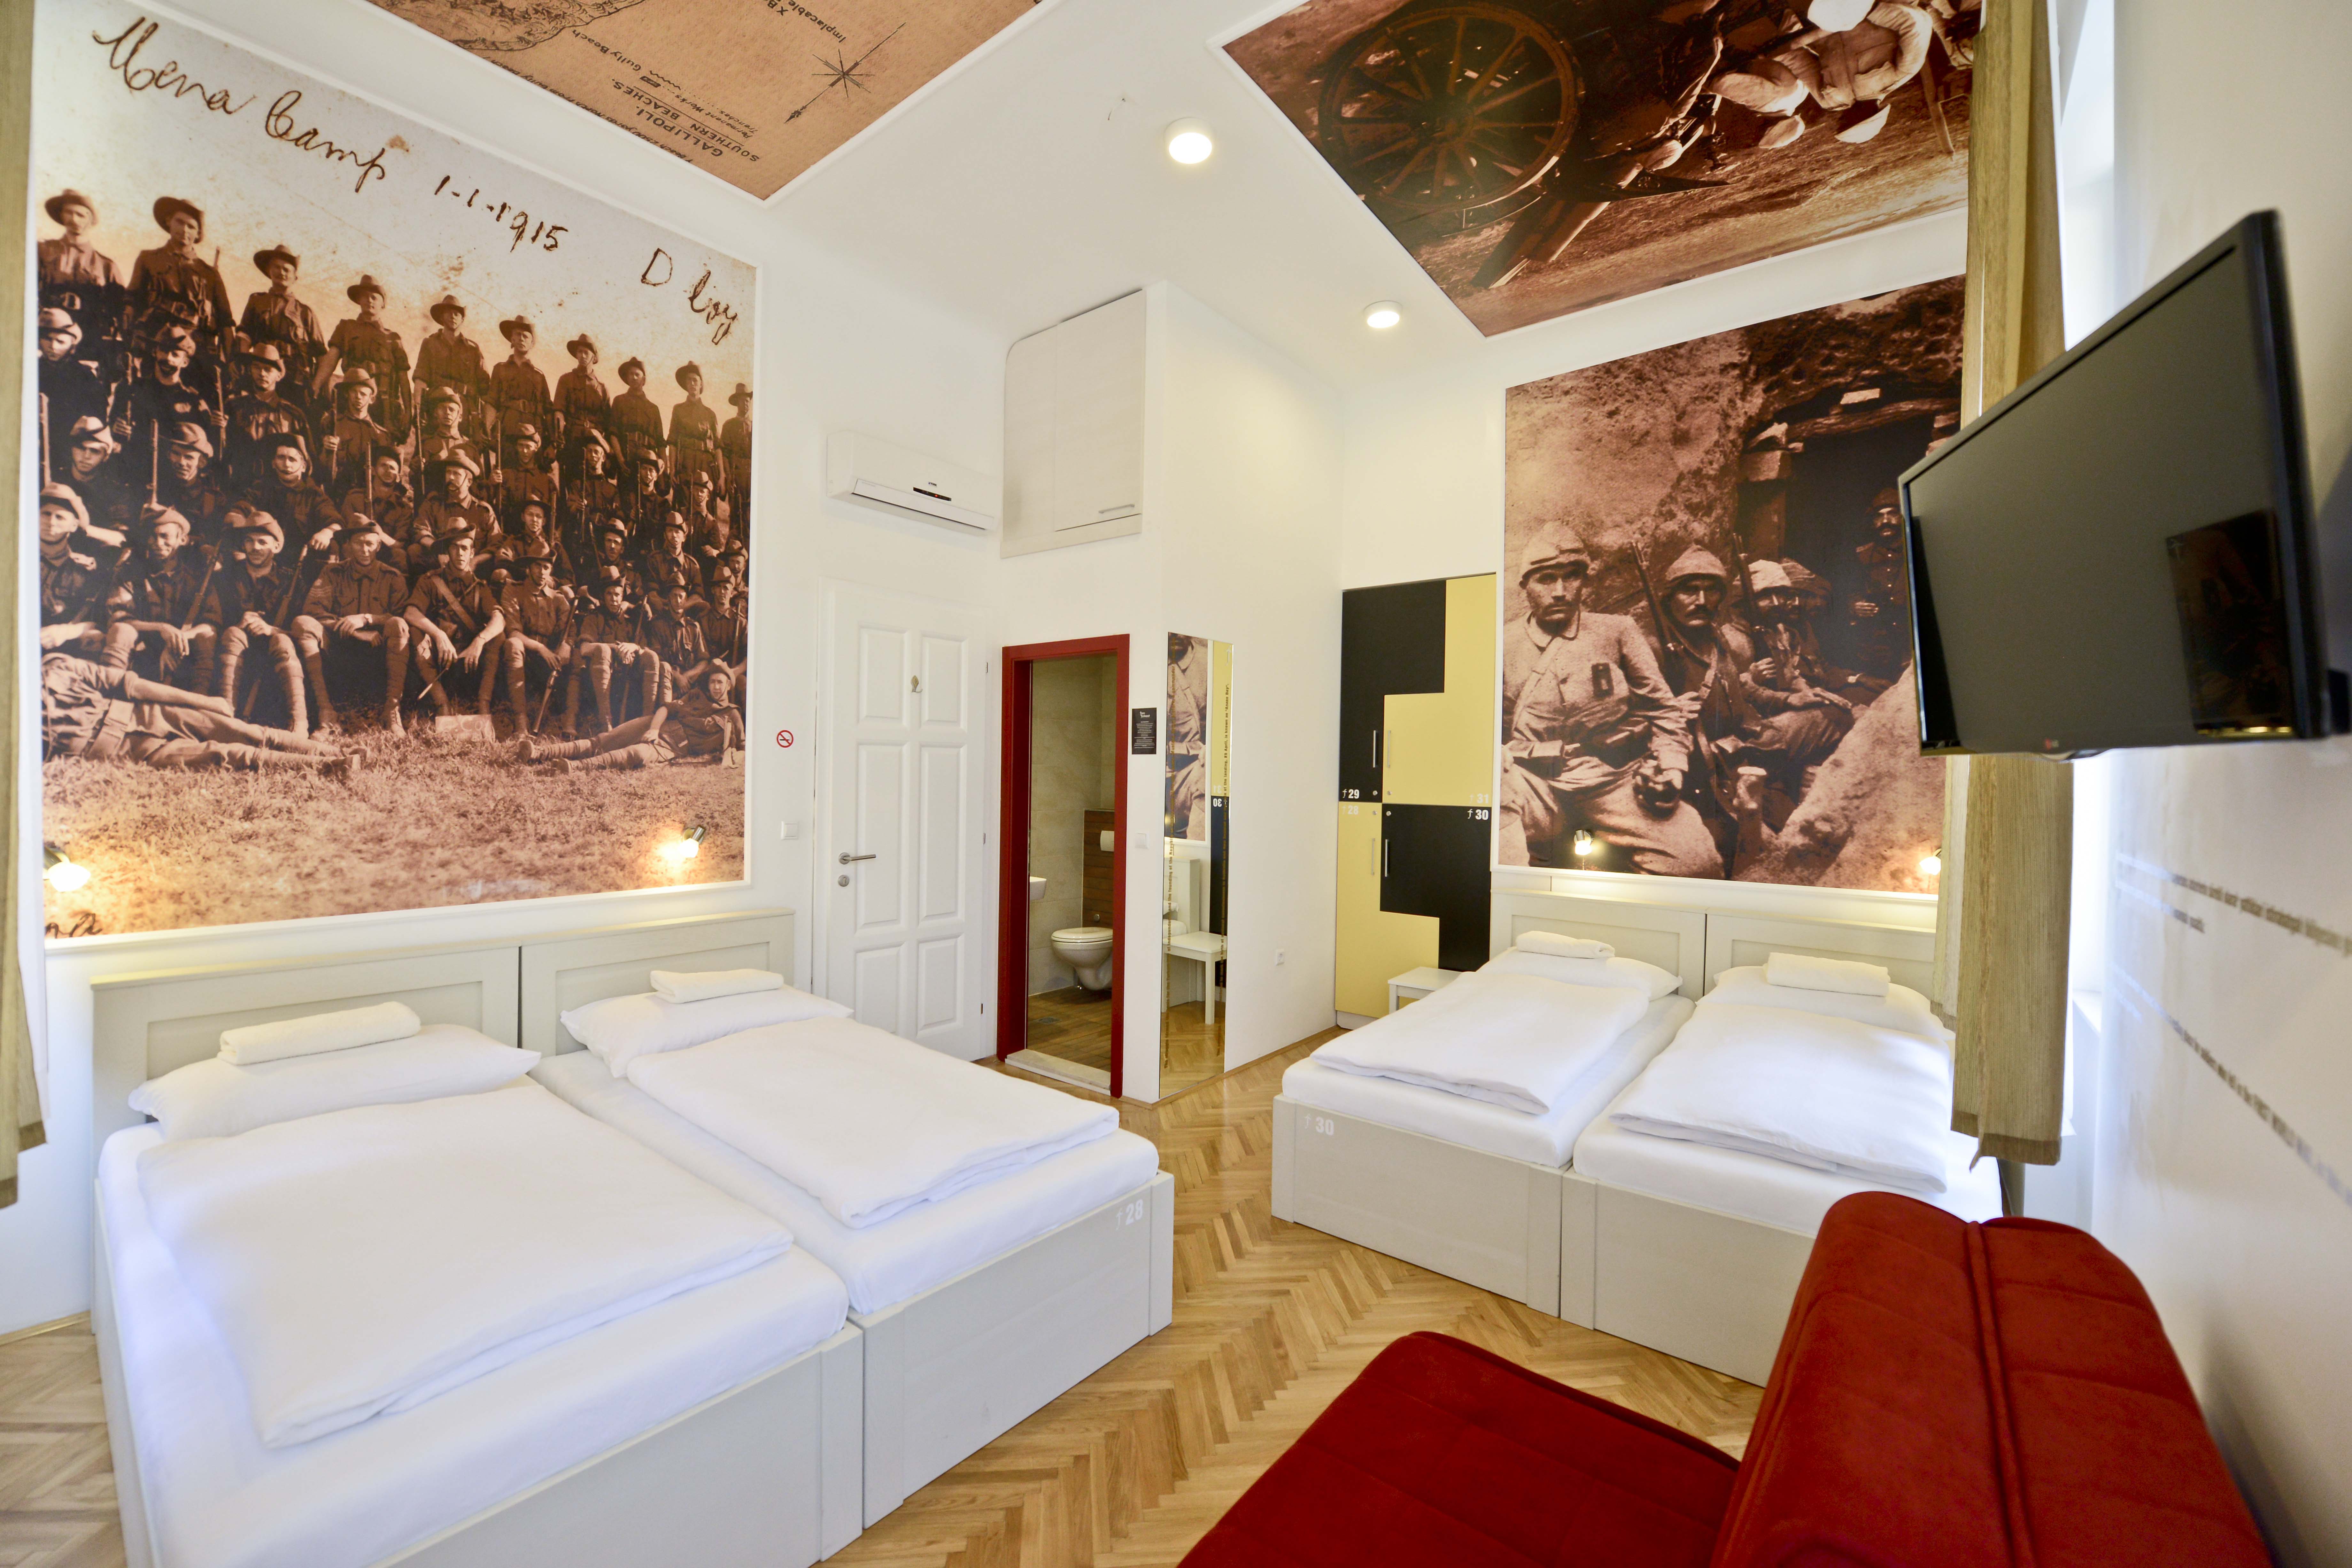 Best Luxury Hostels Of Europe Budgettraveller